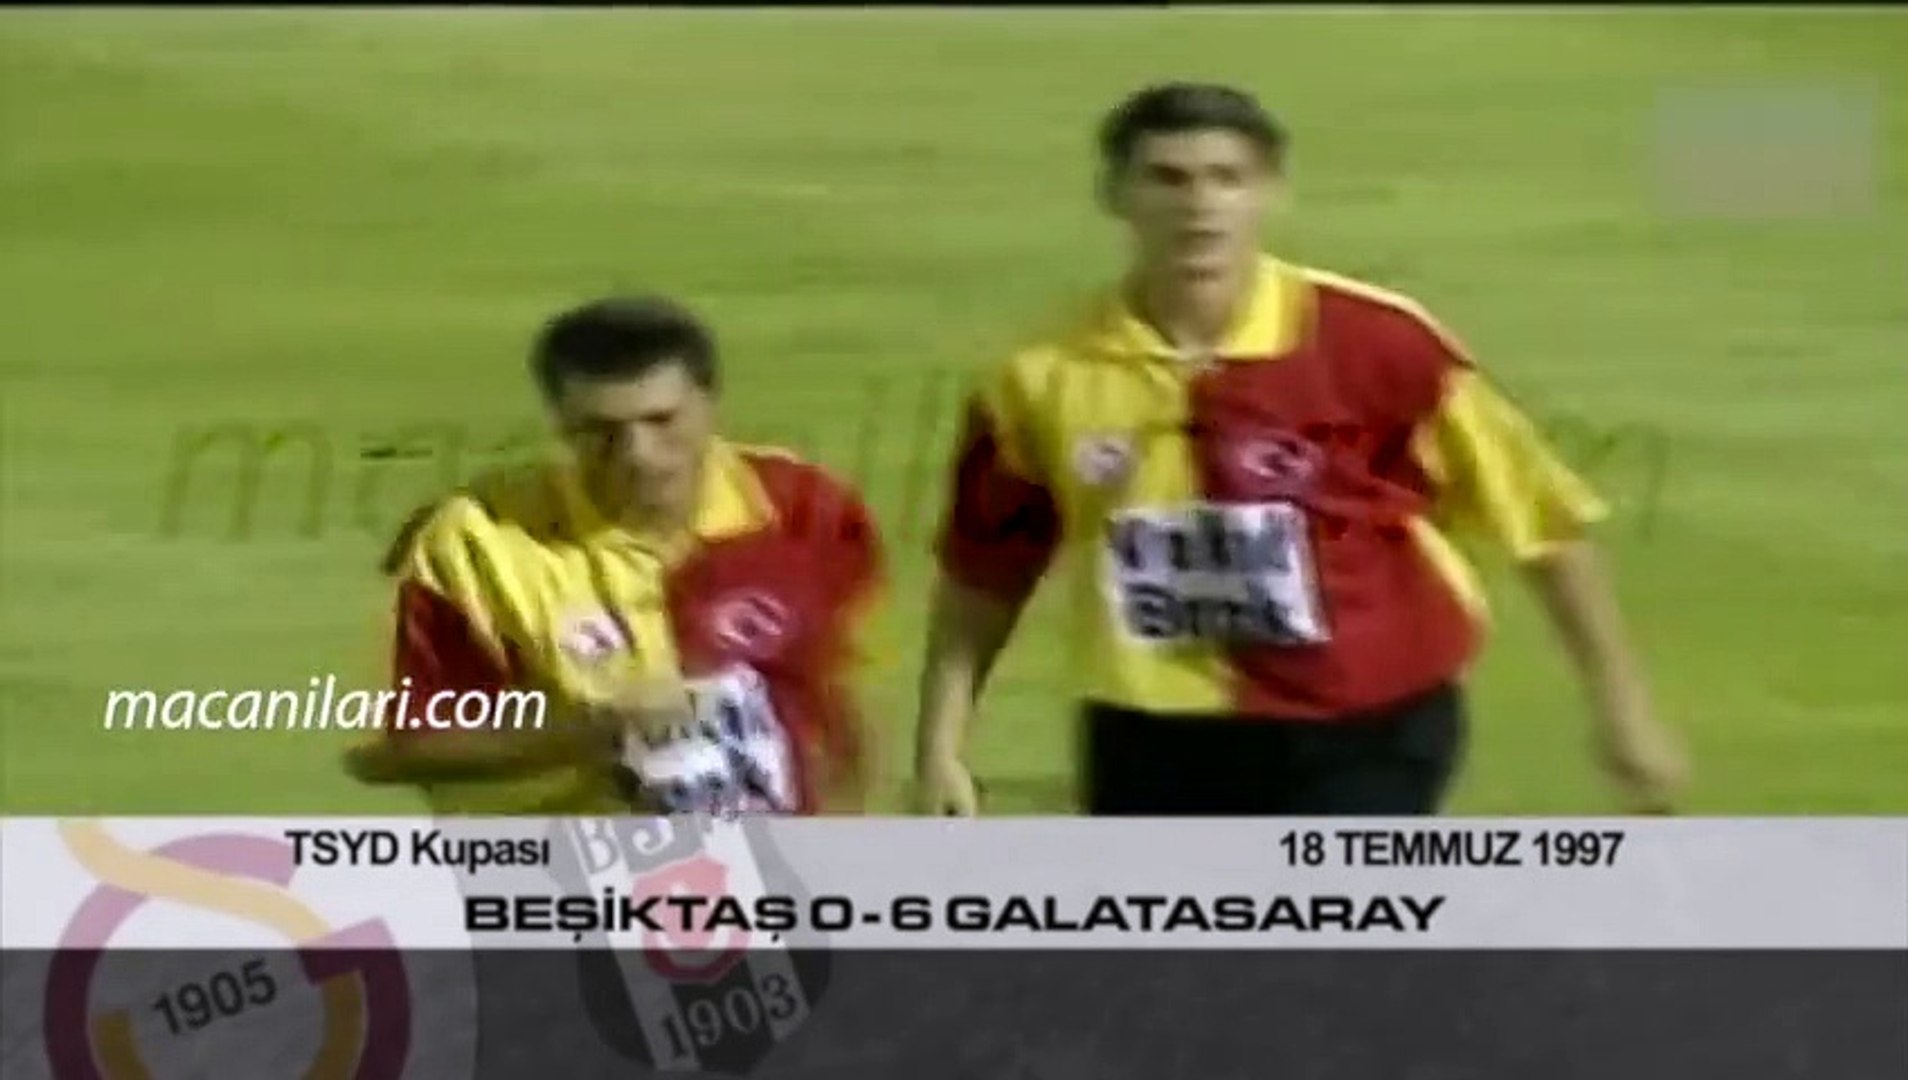 Beşiktaş 0-6 Galatasaray 18.07.1997 - 1997 İstanbul TSYD Cup Matchday 2nd  (Ver. 2) - Dailymotion Video